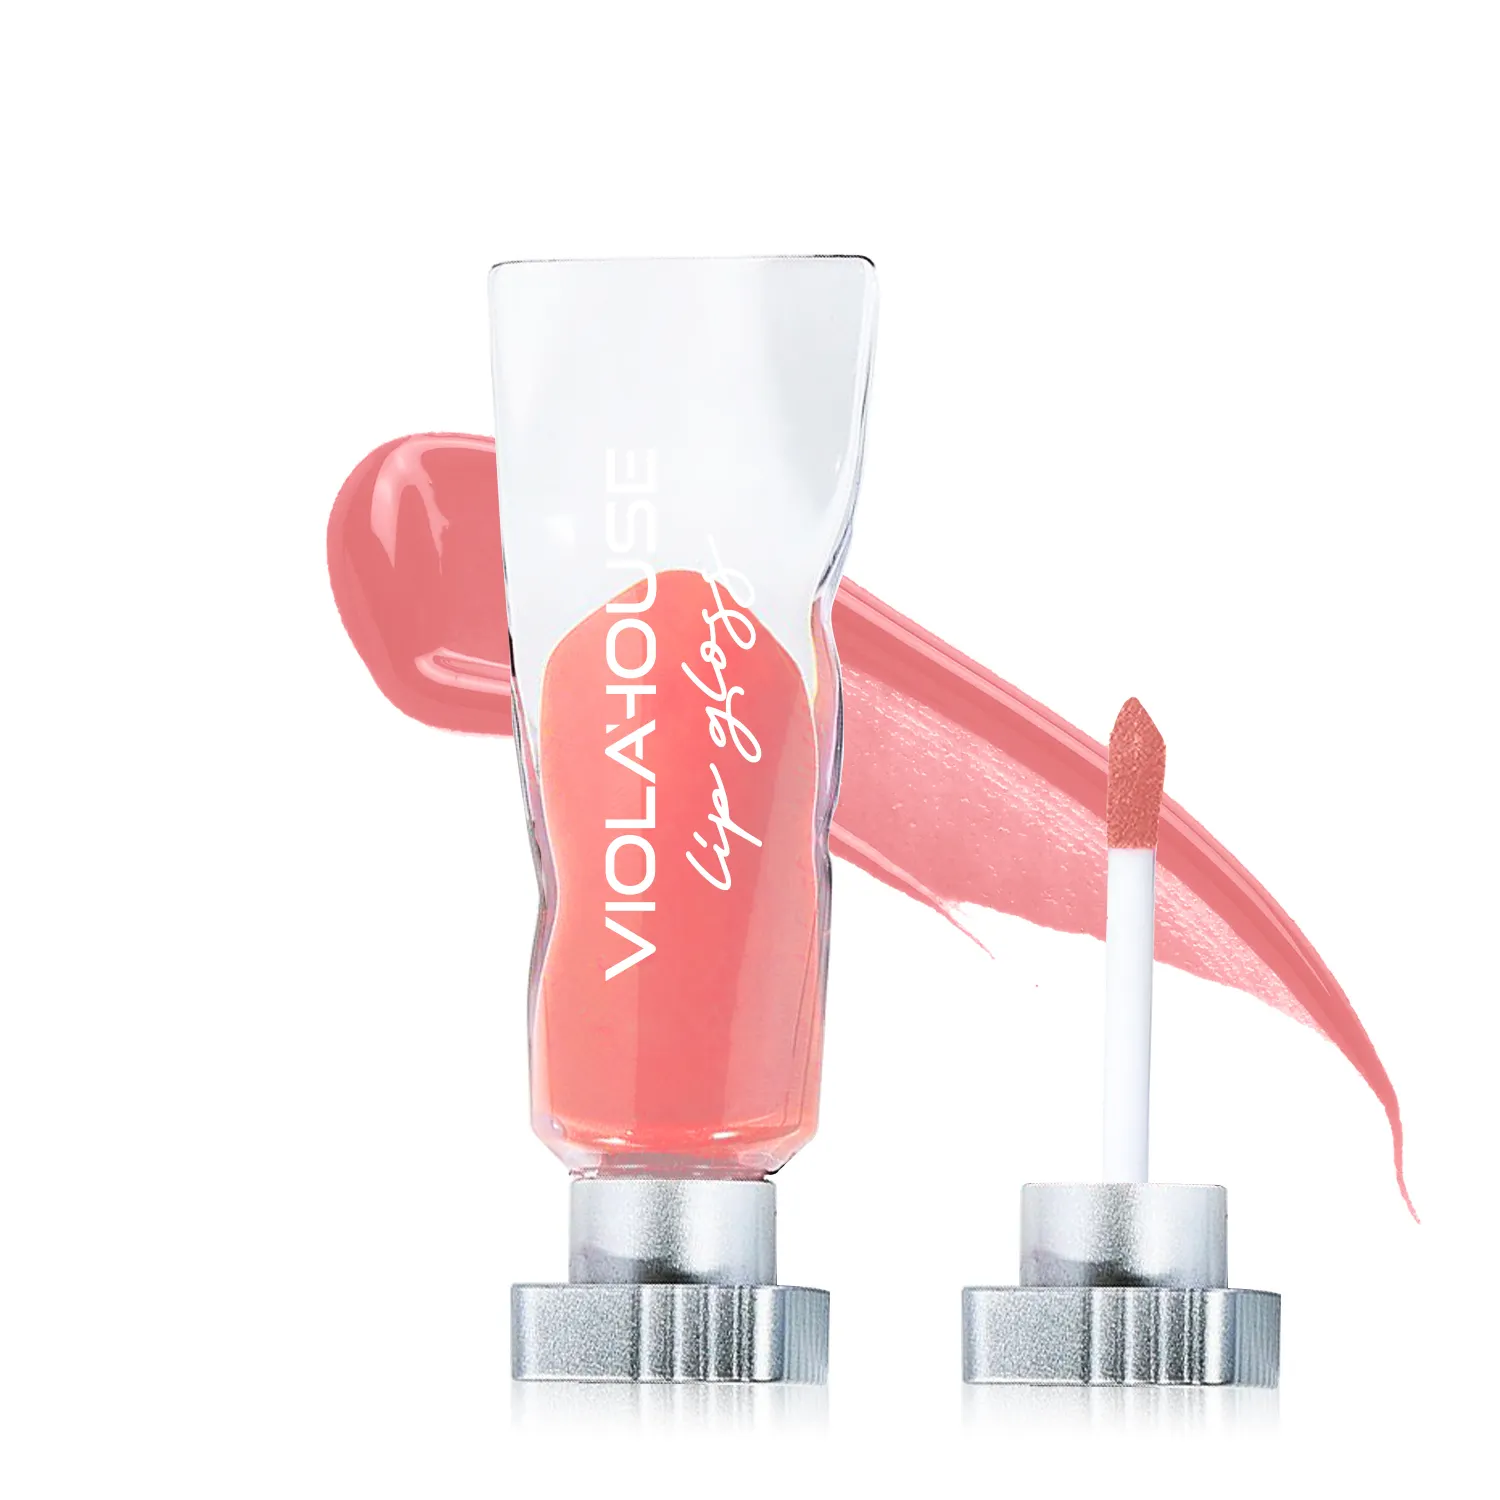 Oem/Odm Mulit Kleur Lippen Tint Make-Up Lipgloss Private Label 13 Kleuren Heldere Spiegel Lip Glazuur